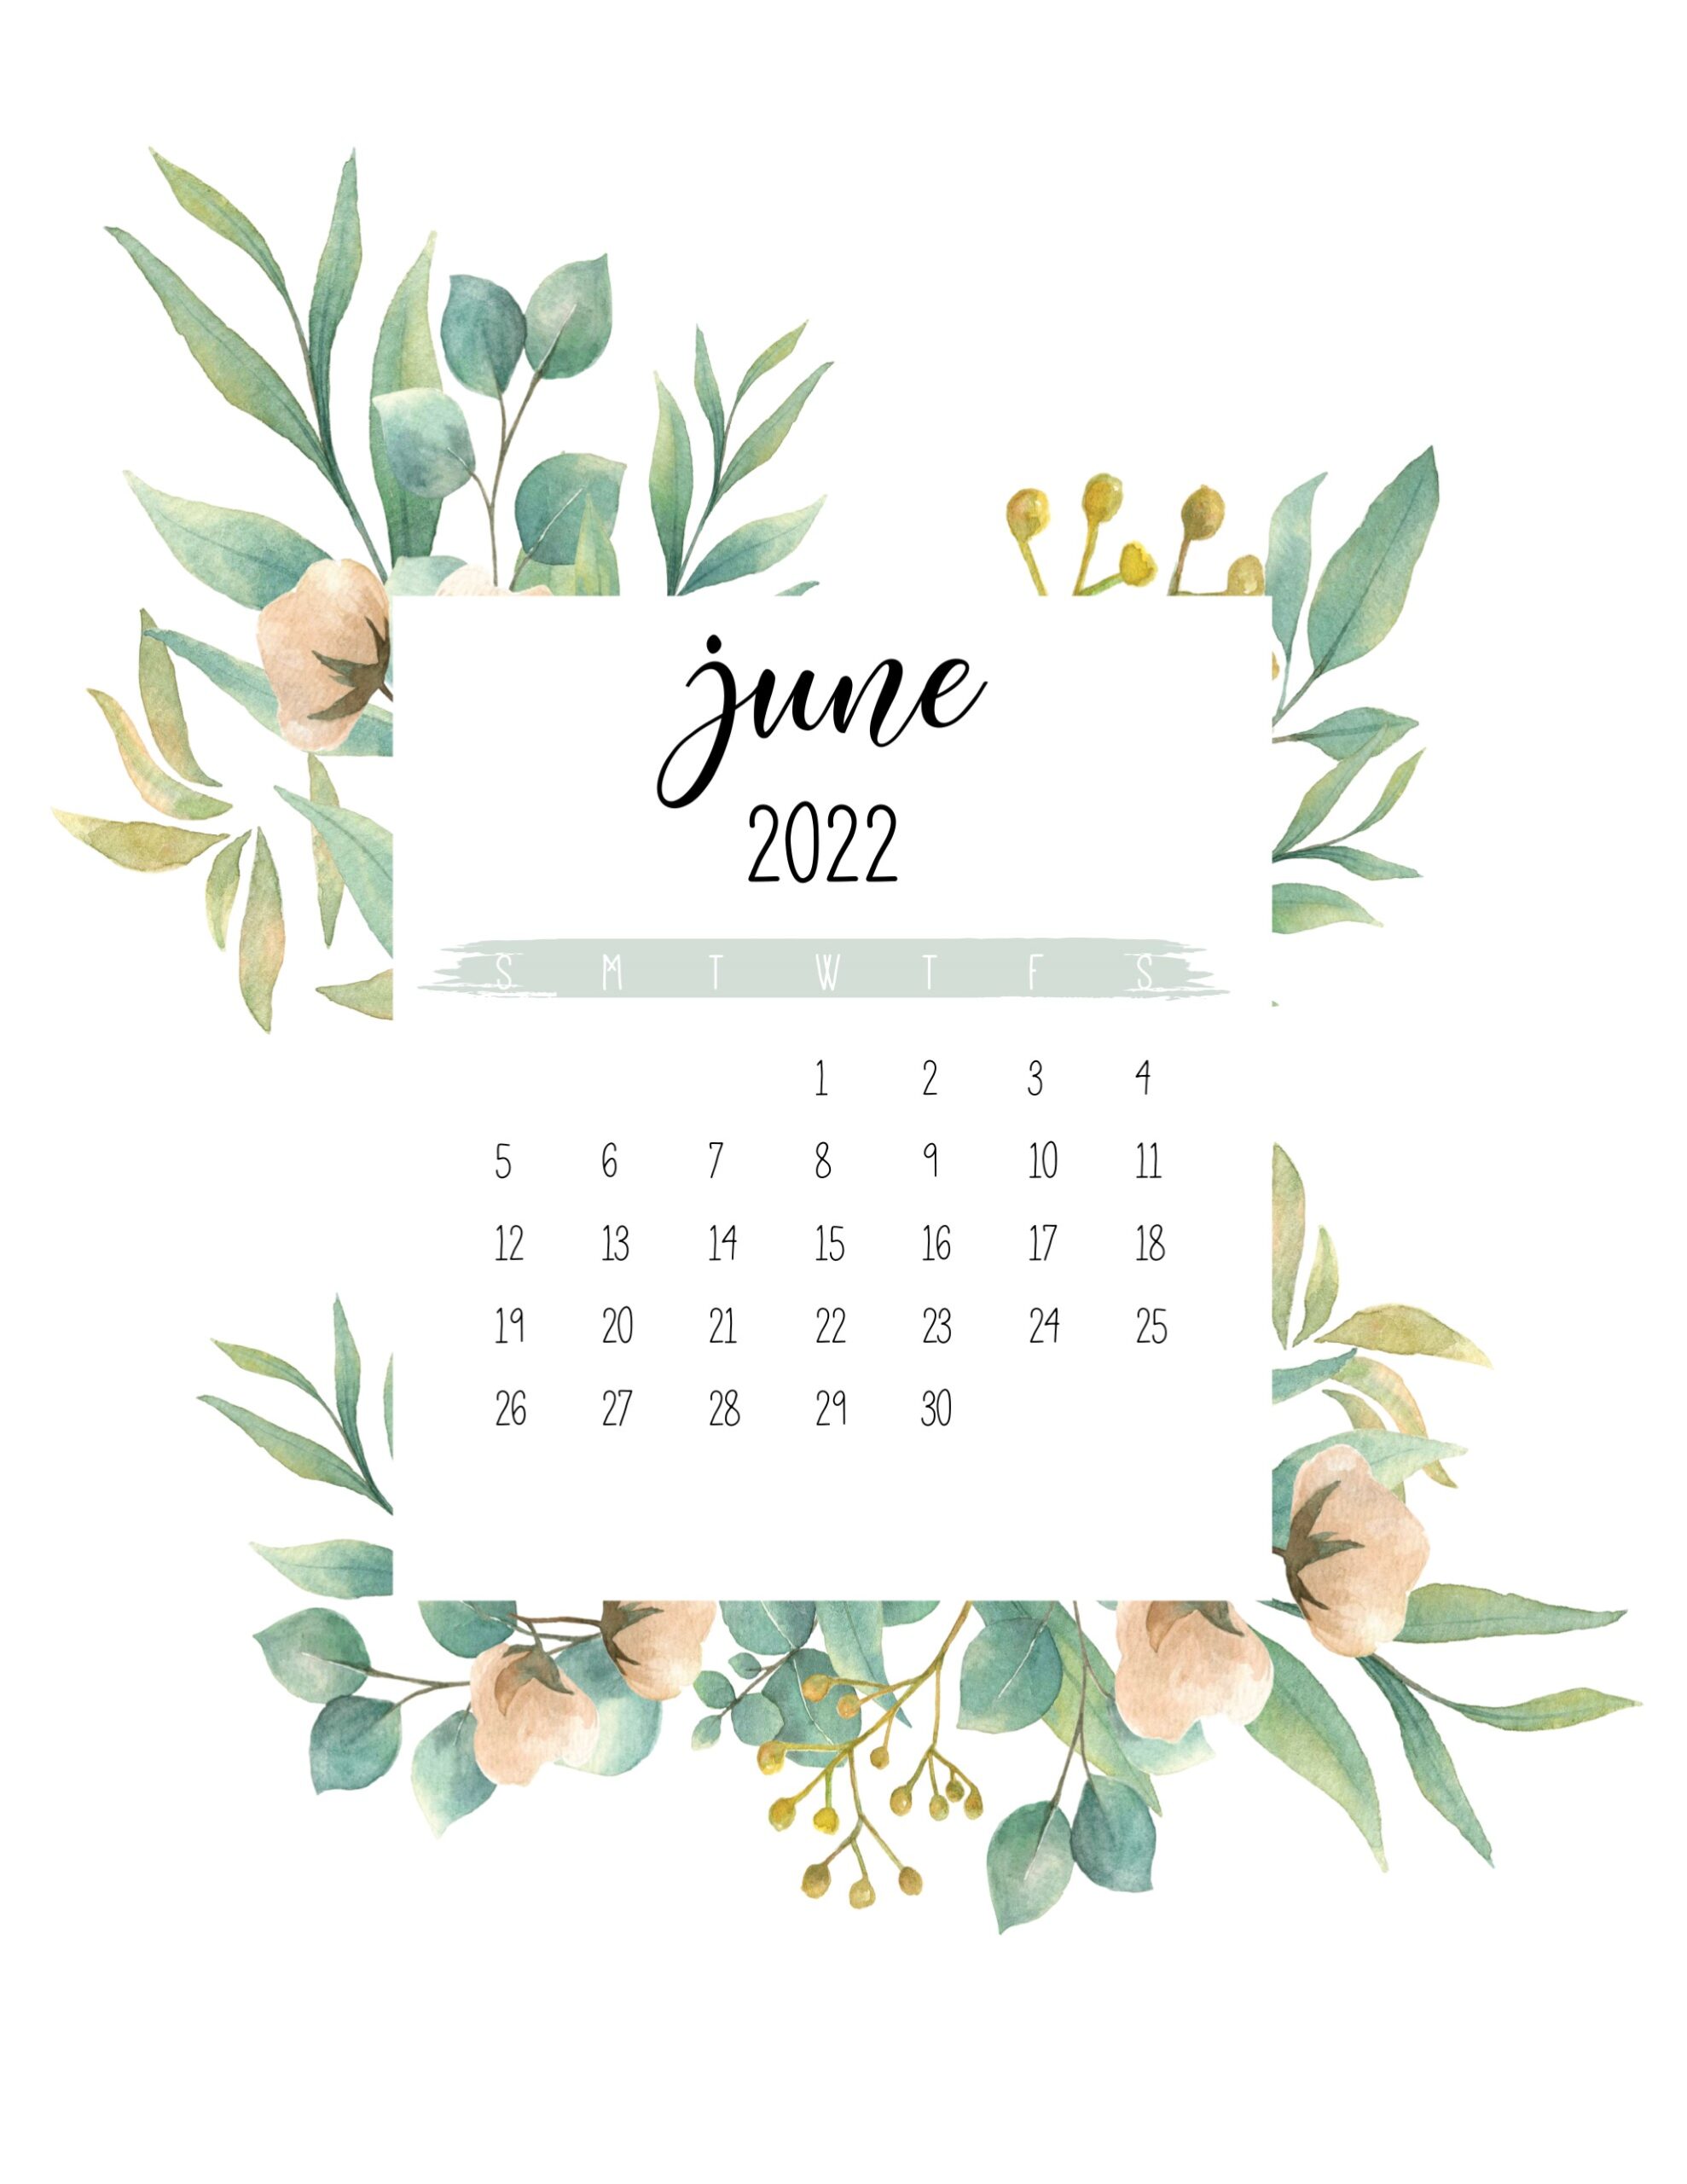 June 2022 Calendar Wallpapers - Wallpaper Cave